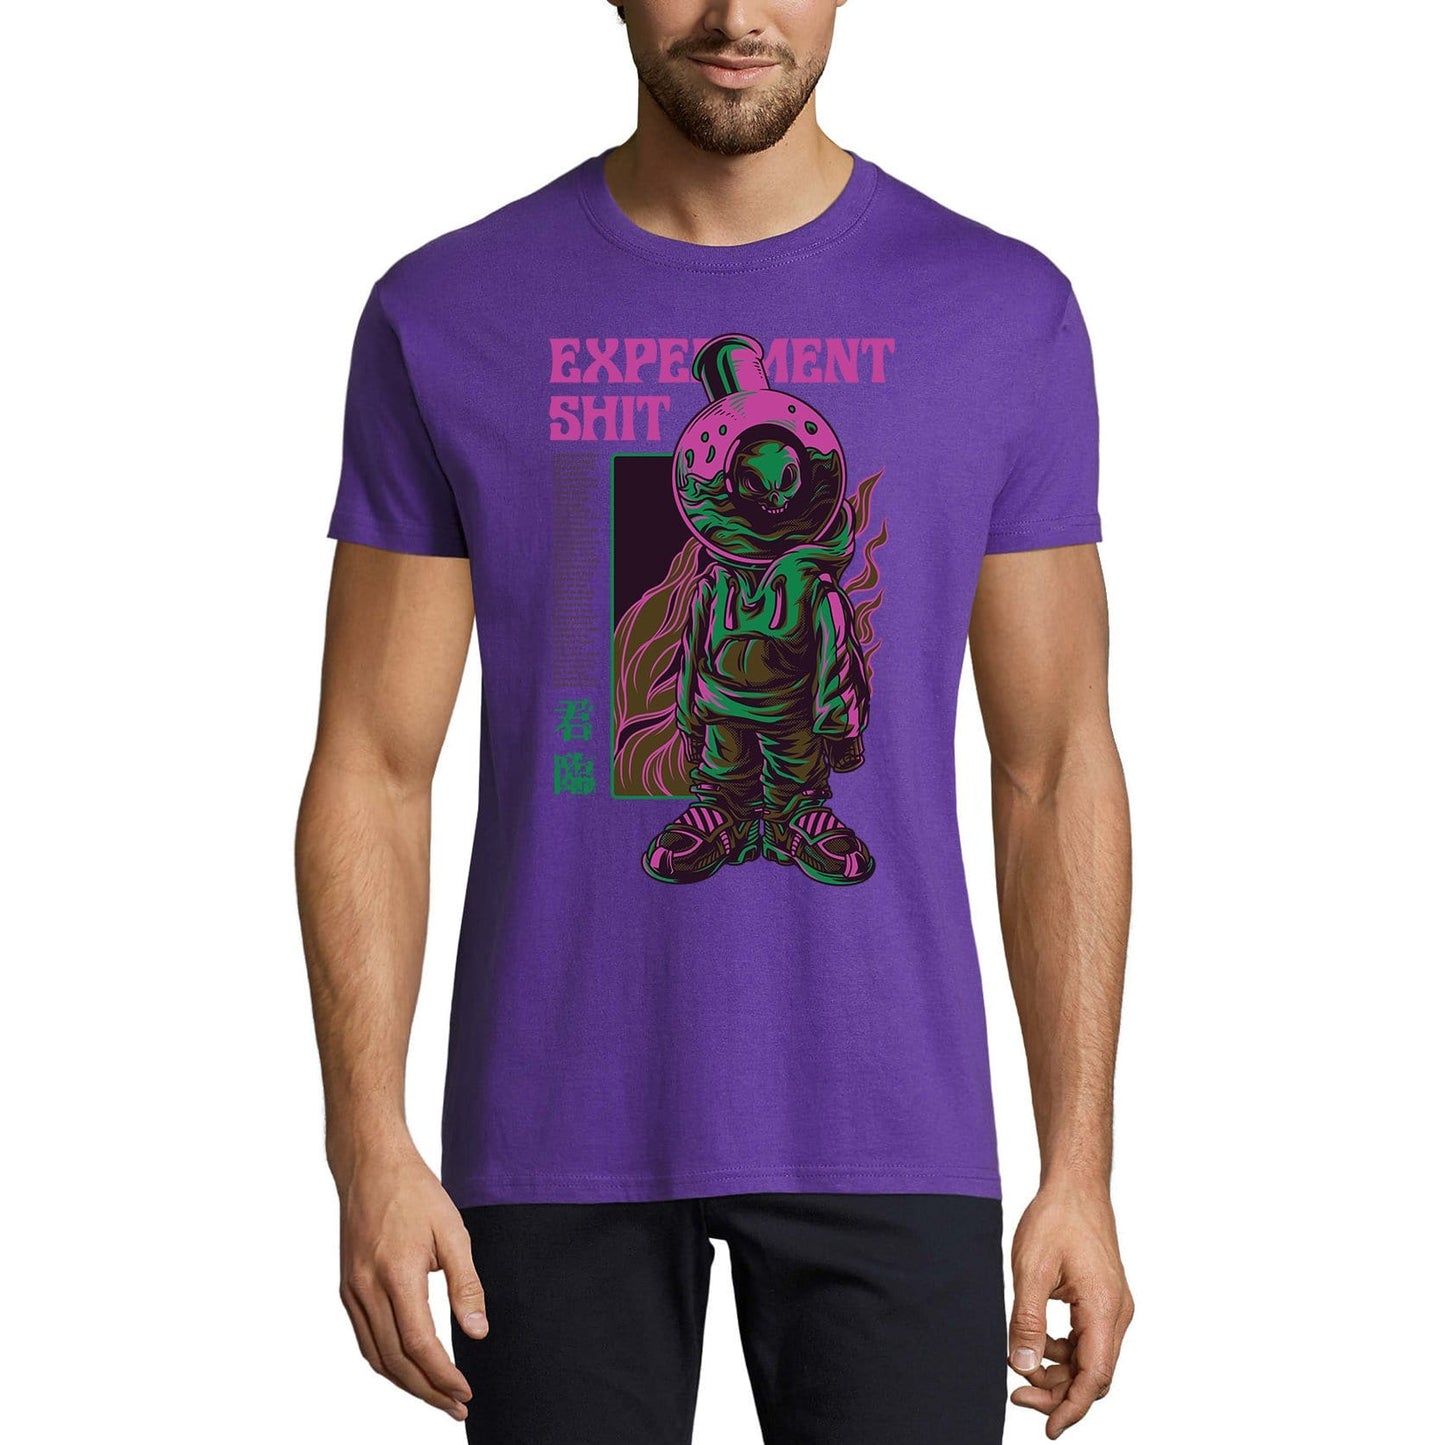 ULTRABASIC Men's Novelty T-Shirt Experiment Shit - Scary Tee Shirt